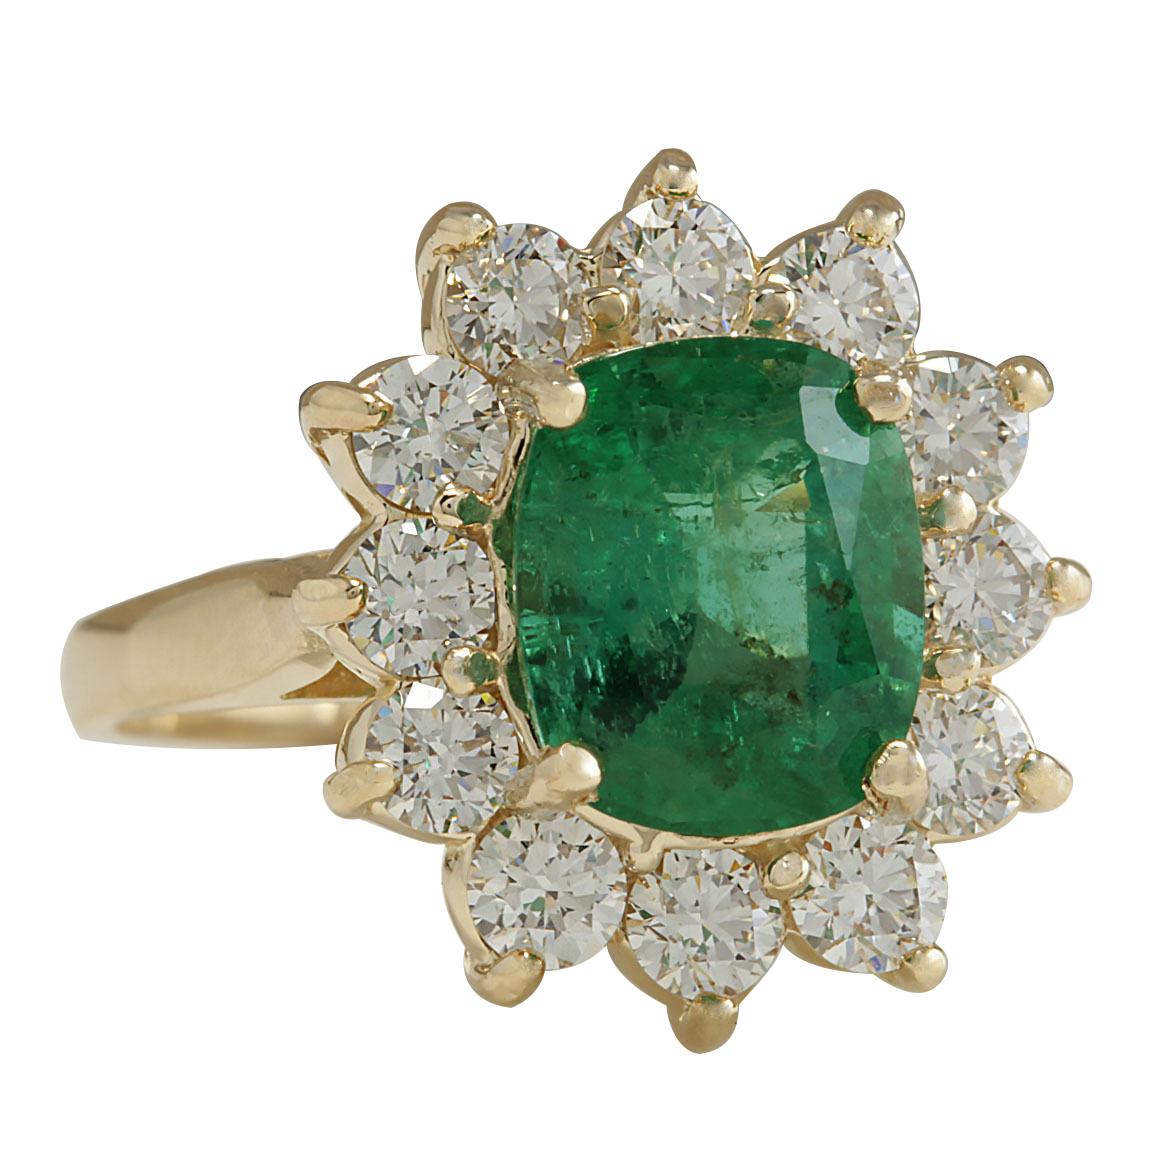 3.98 Carat Natural Emerald 14 Karat Yellow Gold Diamond Ring
Stamped: 14K Yellow Gold
Total Ring Weight: 5.6 Grams
Total Natural Emerald Weight is 2.78 Carat (Measures: 9.00x7.00 mm)
Color: Green
Total Natural Diamond Weight is 1.20 Carat
Quantity: